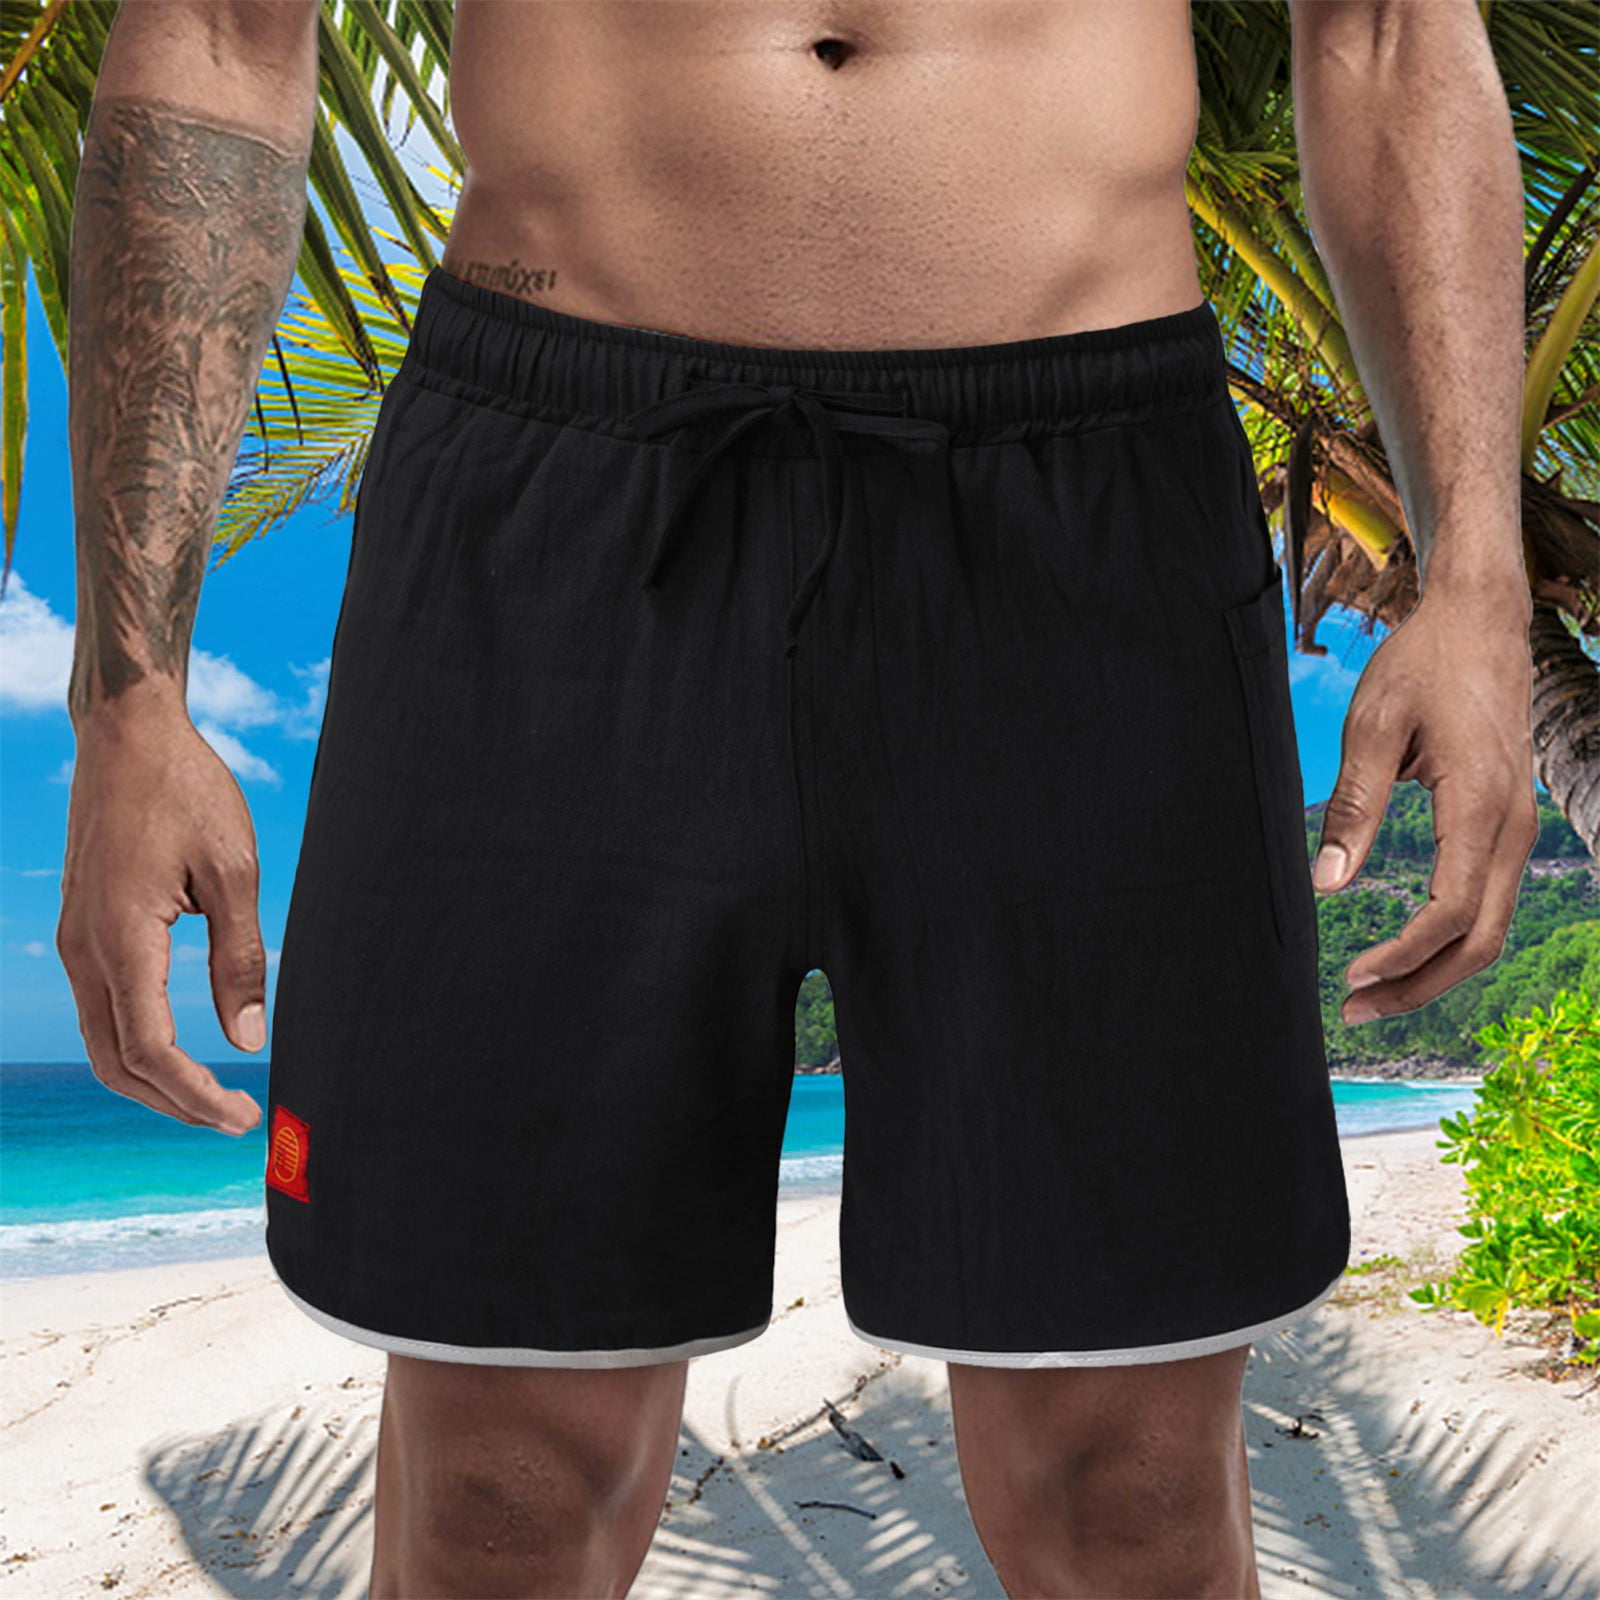 ALSLIAO Shorts Swimming Pants Men Swim Trunks Beach Big Pouch Bikini Briefs  Cup Prevent - Walmart.com